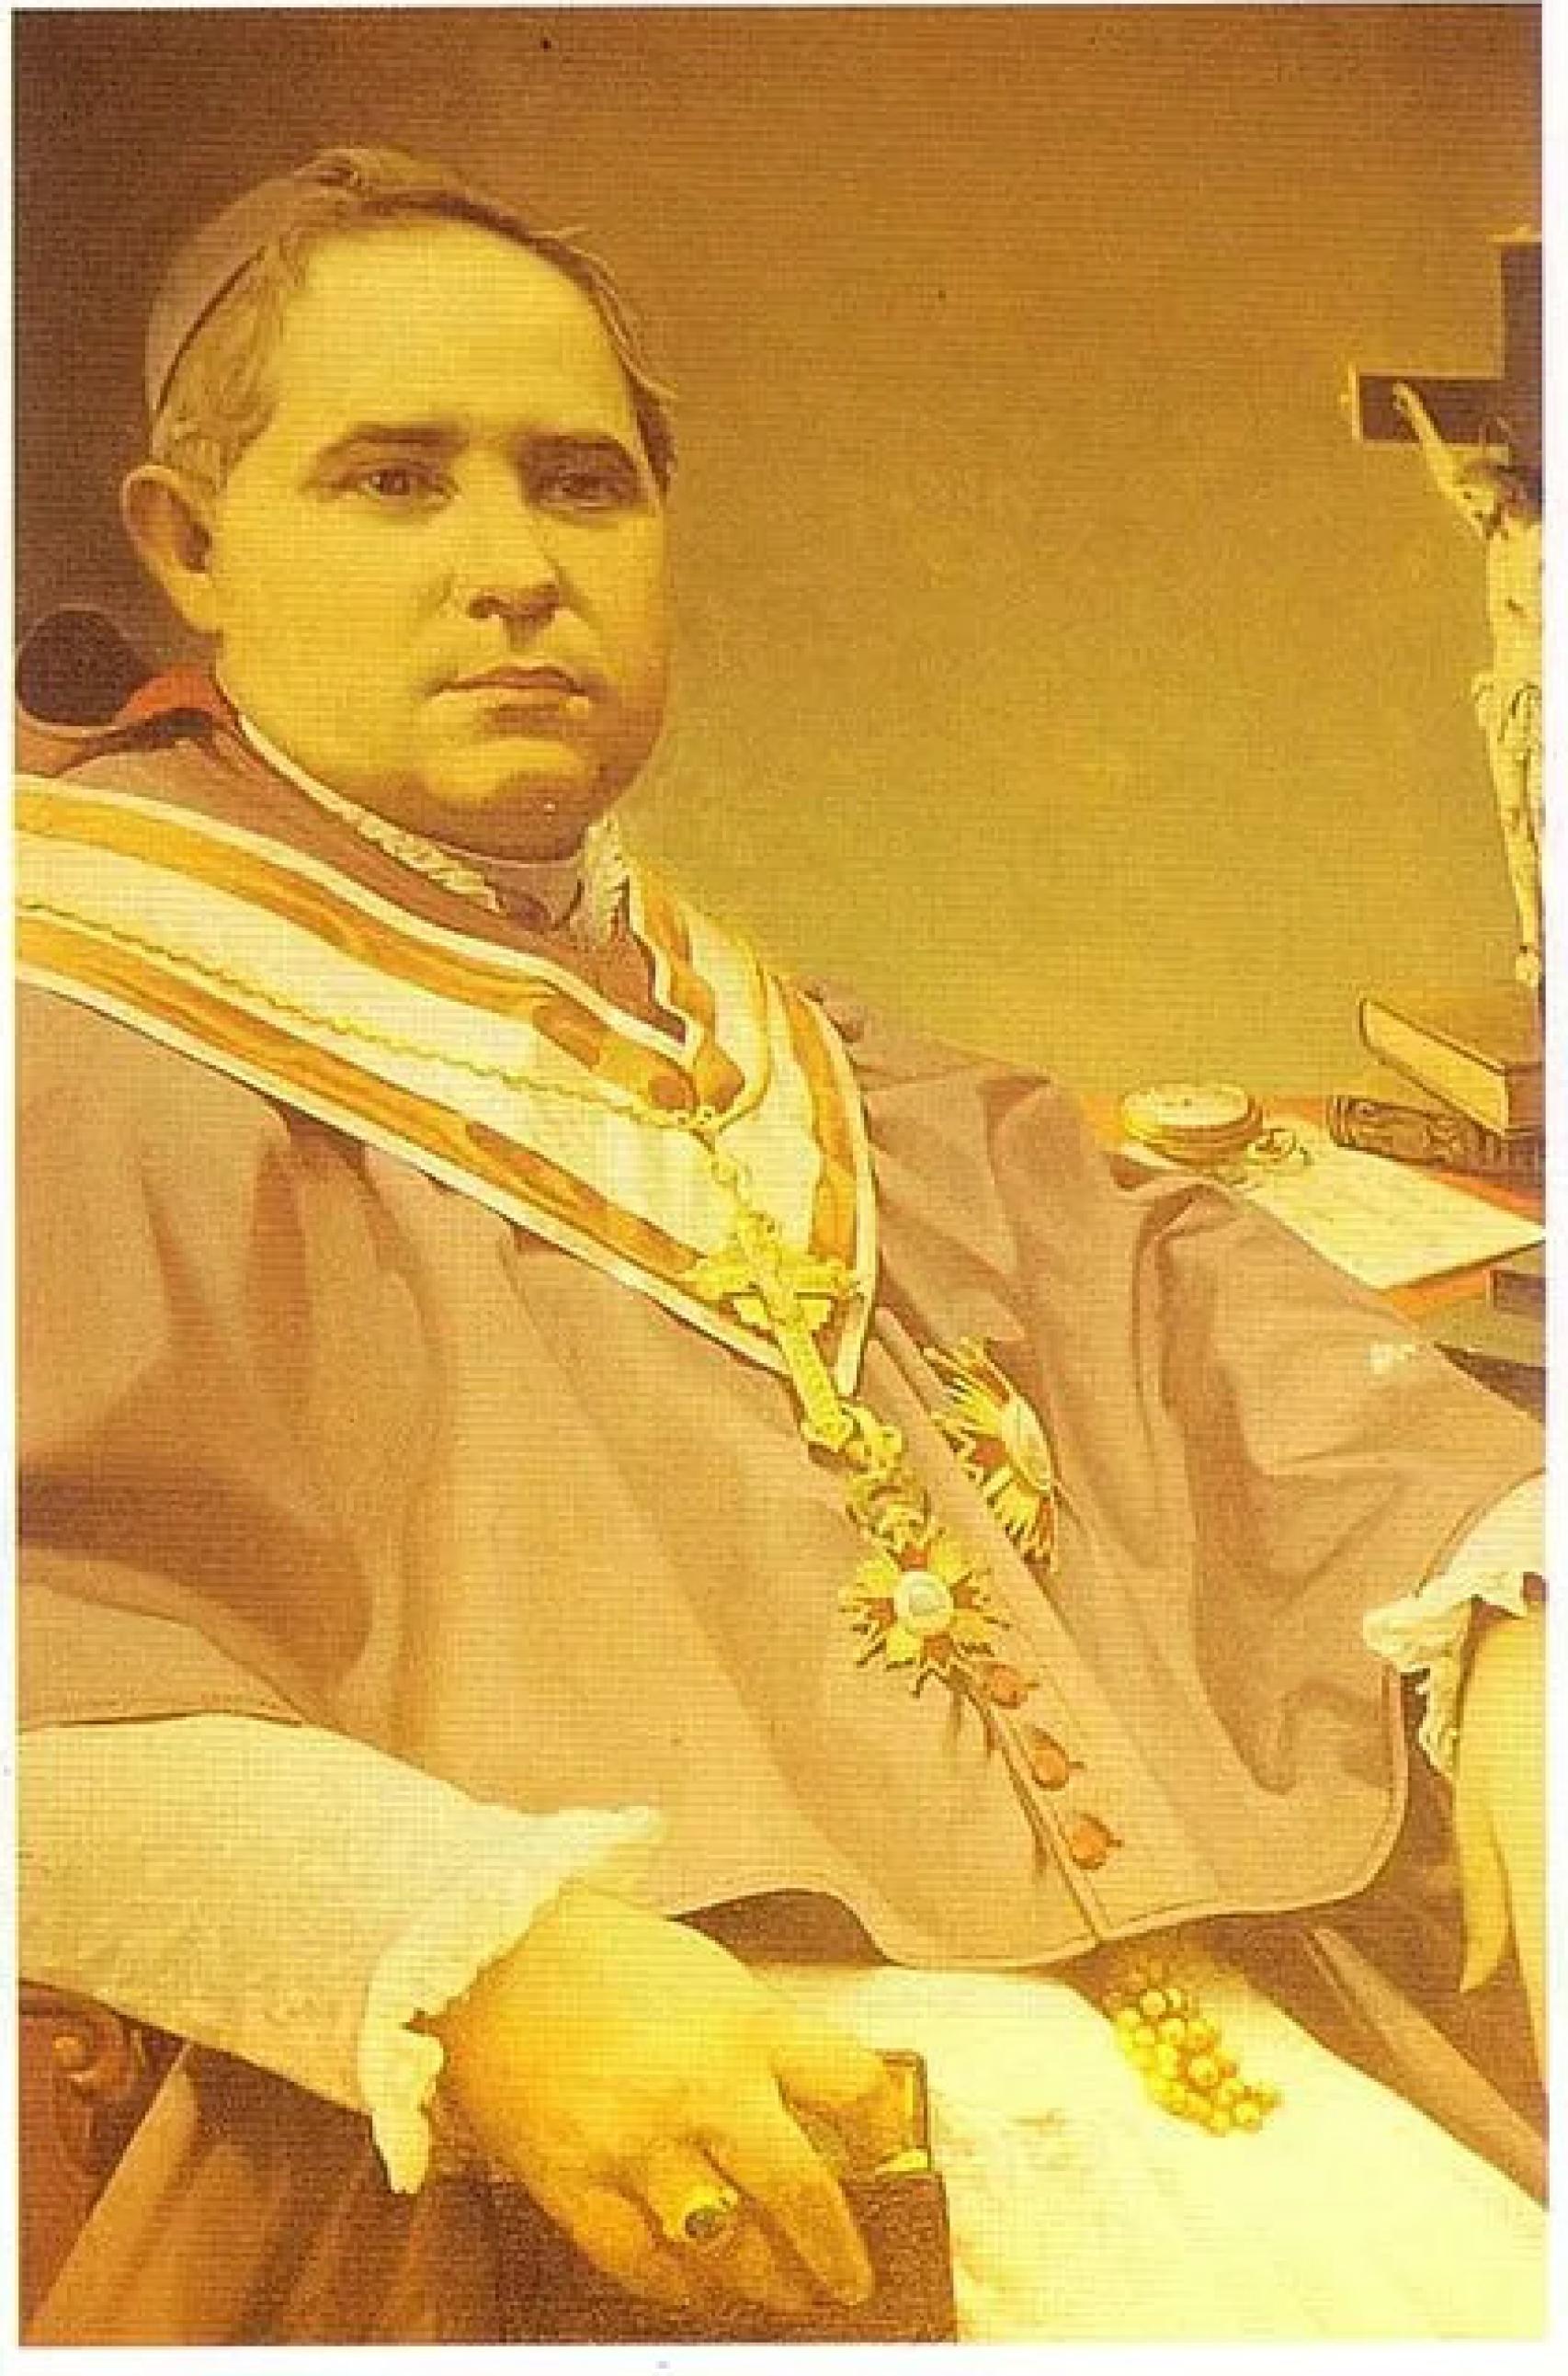 Luis Felipe Ortiz y Gutiérrez, obispo de Zamora de 1893 a 1914